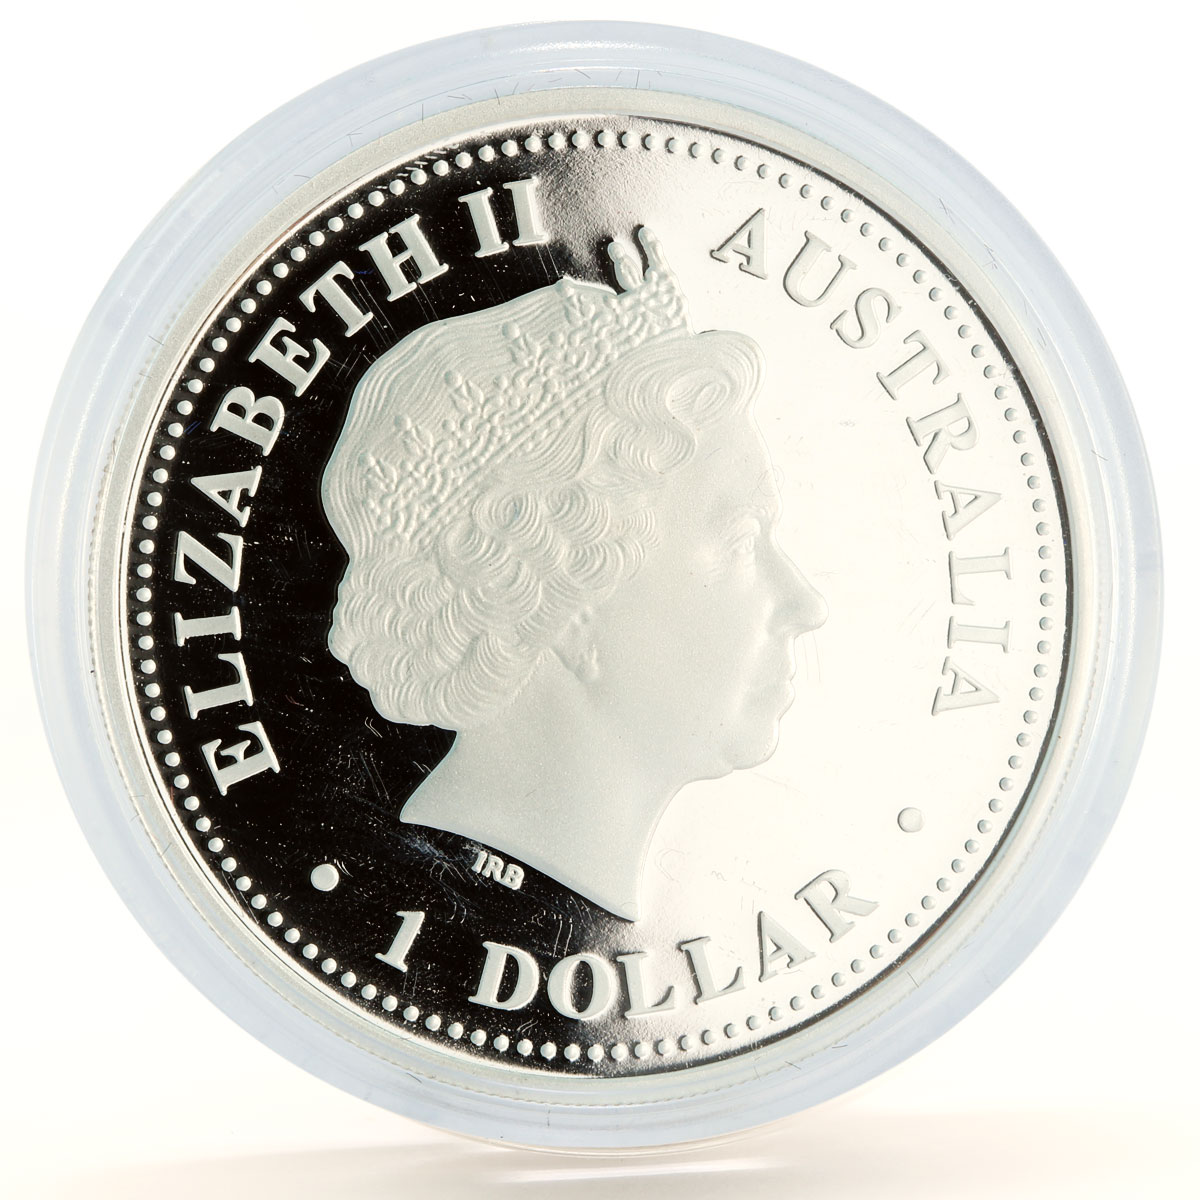 Australia 1 dollar Discover Australia Adelaide Grapes colored silver coin 2007